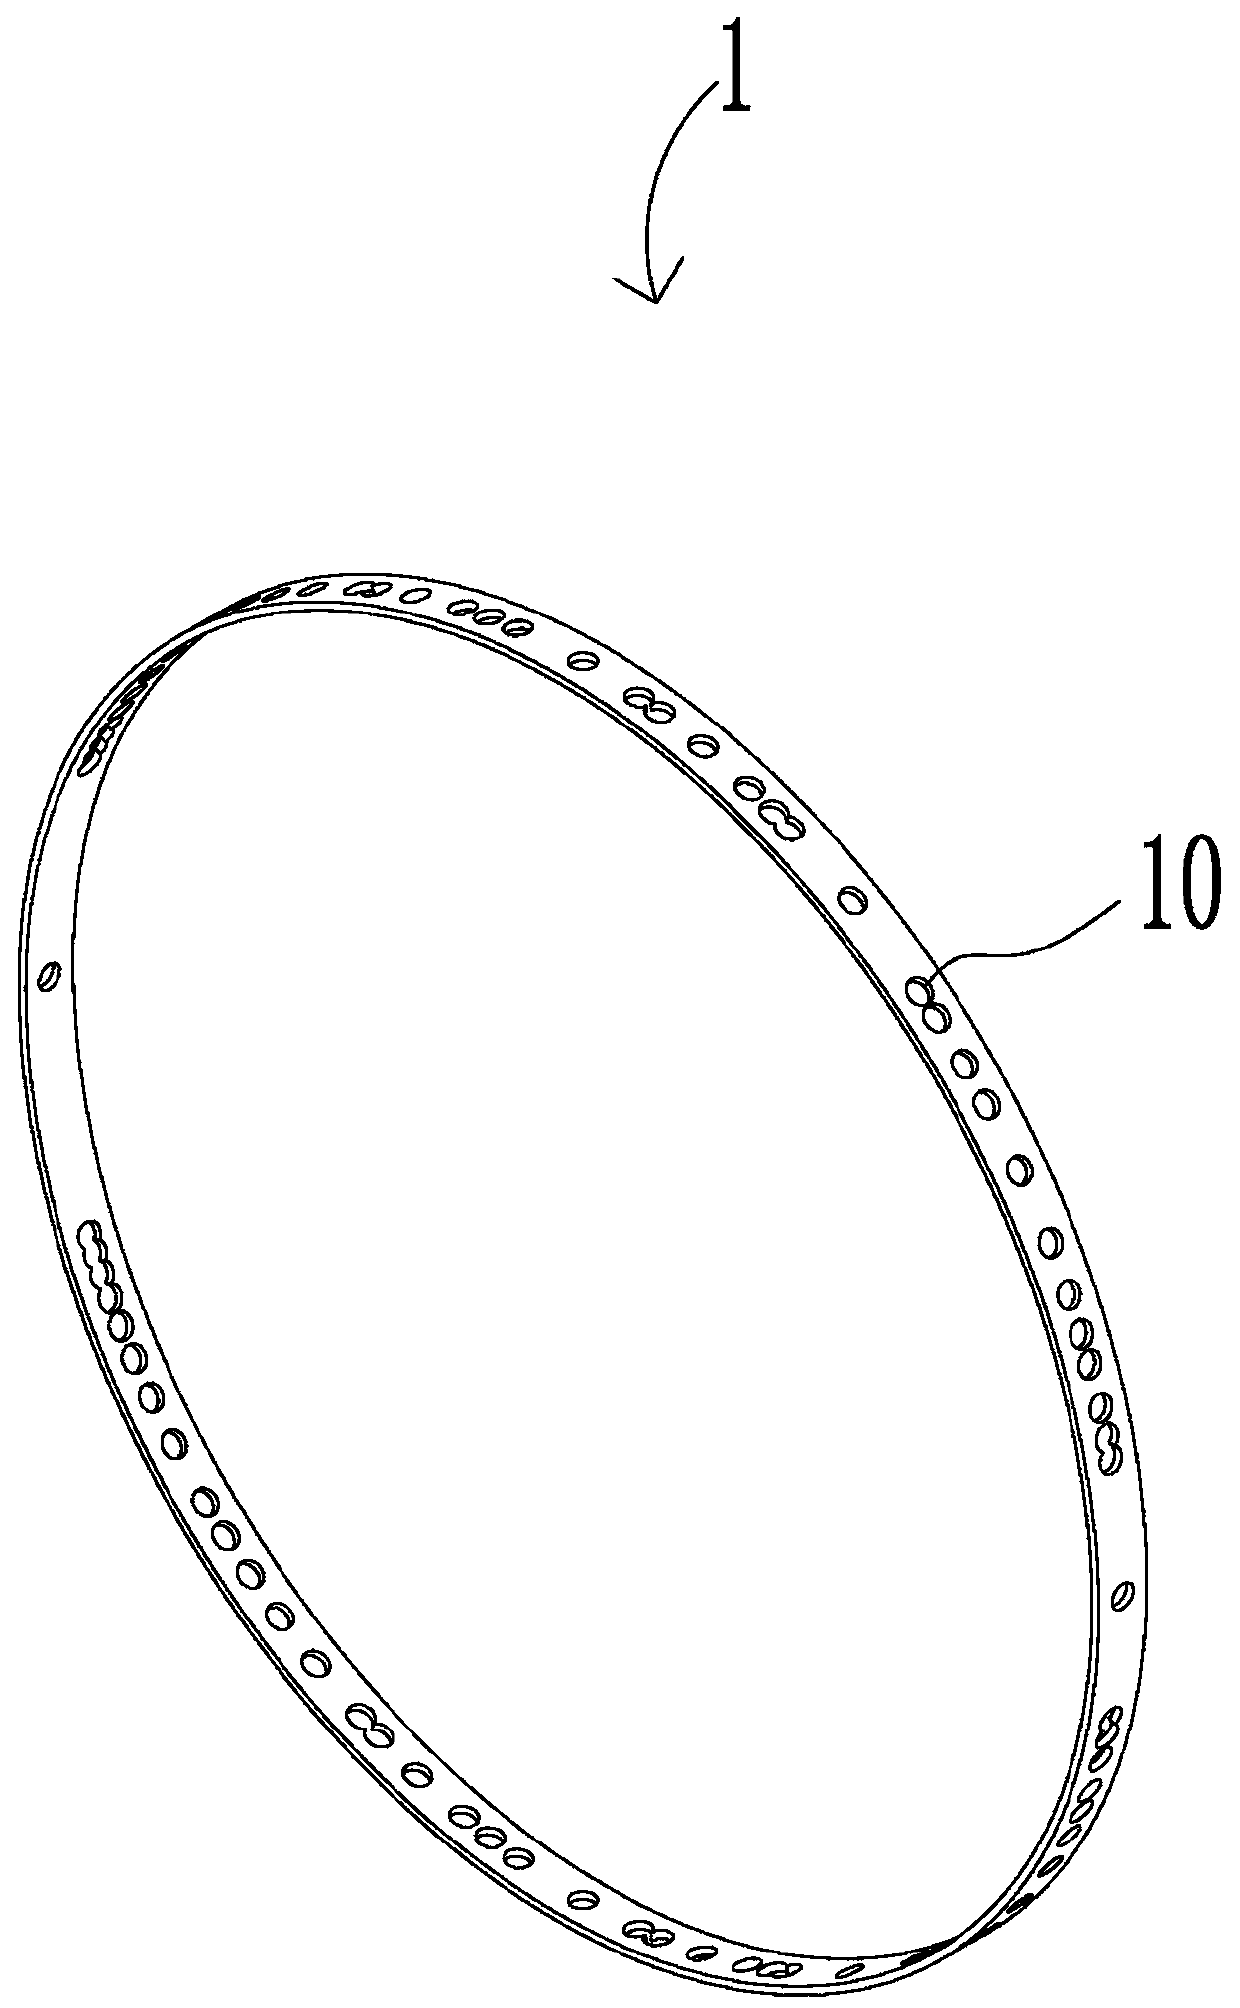 A kind of hole planter adjustable seed ring belt assembly